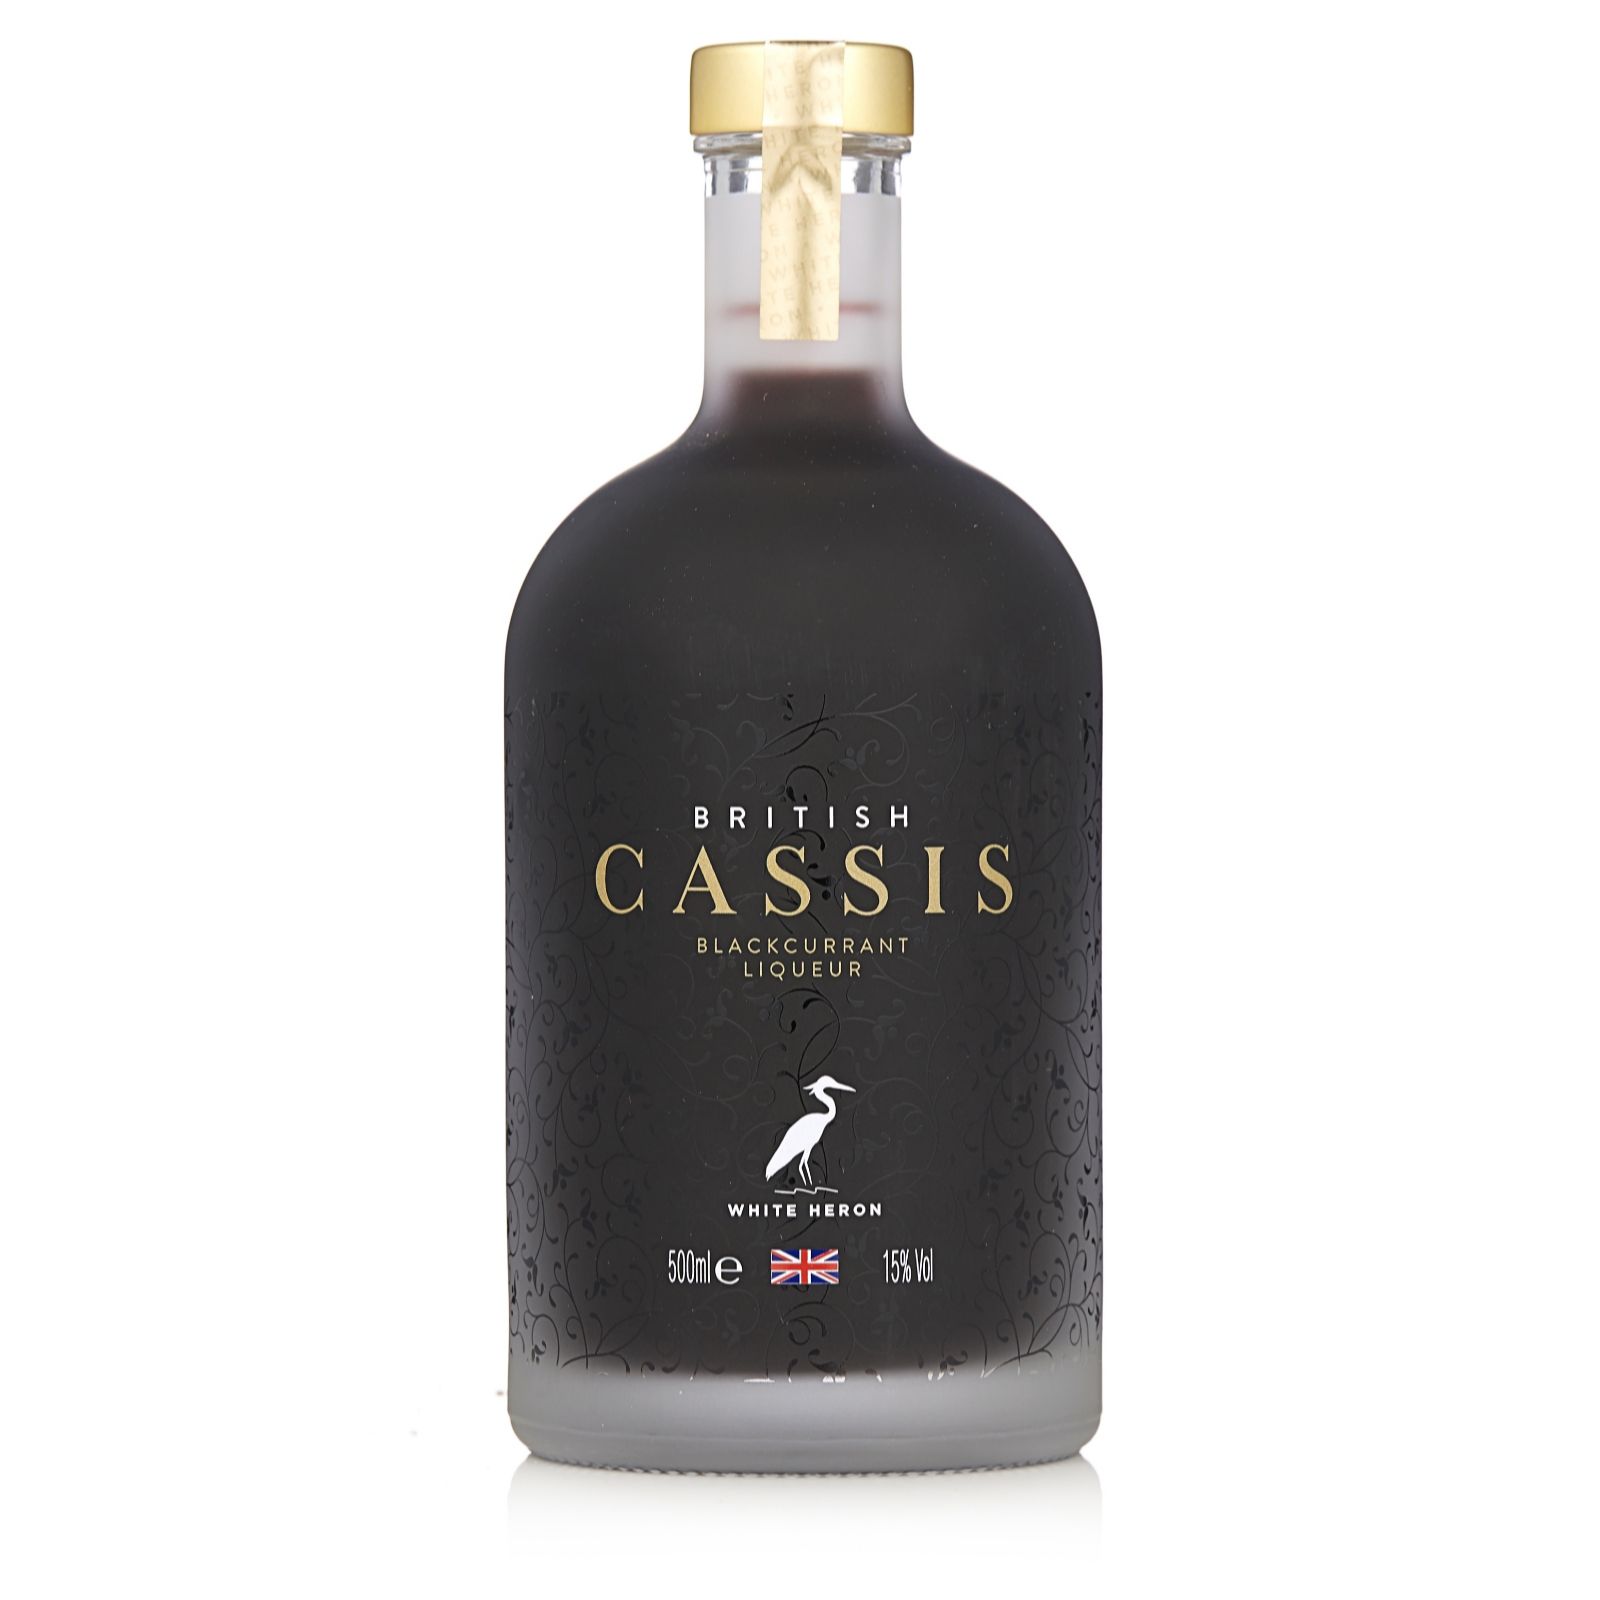 British Cassis 500ml Blackcurrant Liqueur in Gift Box - QVC UK